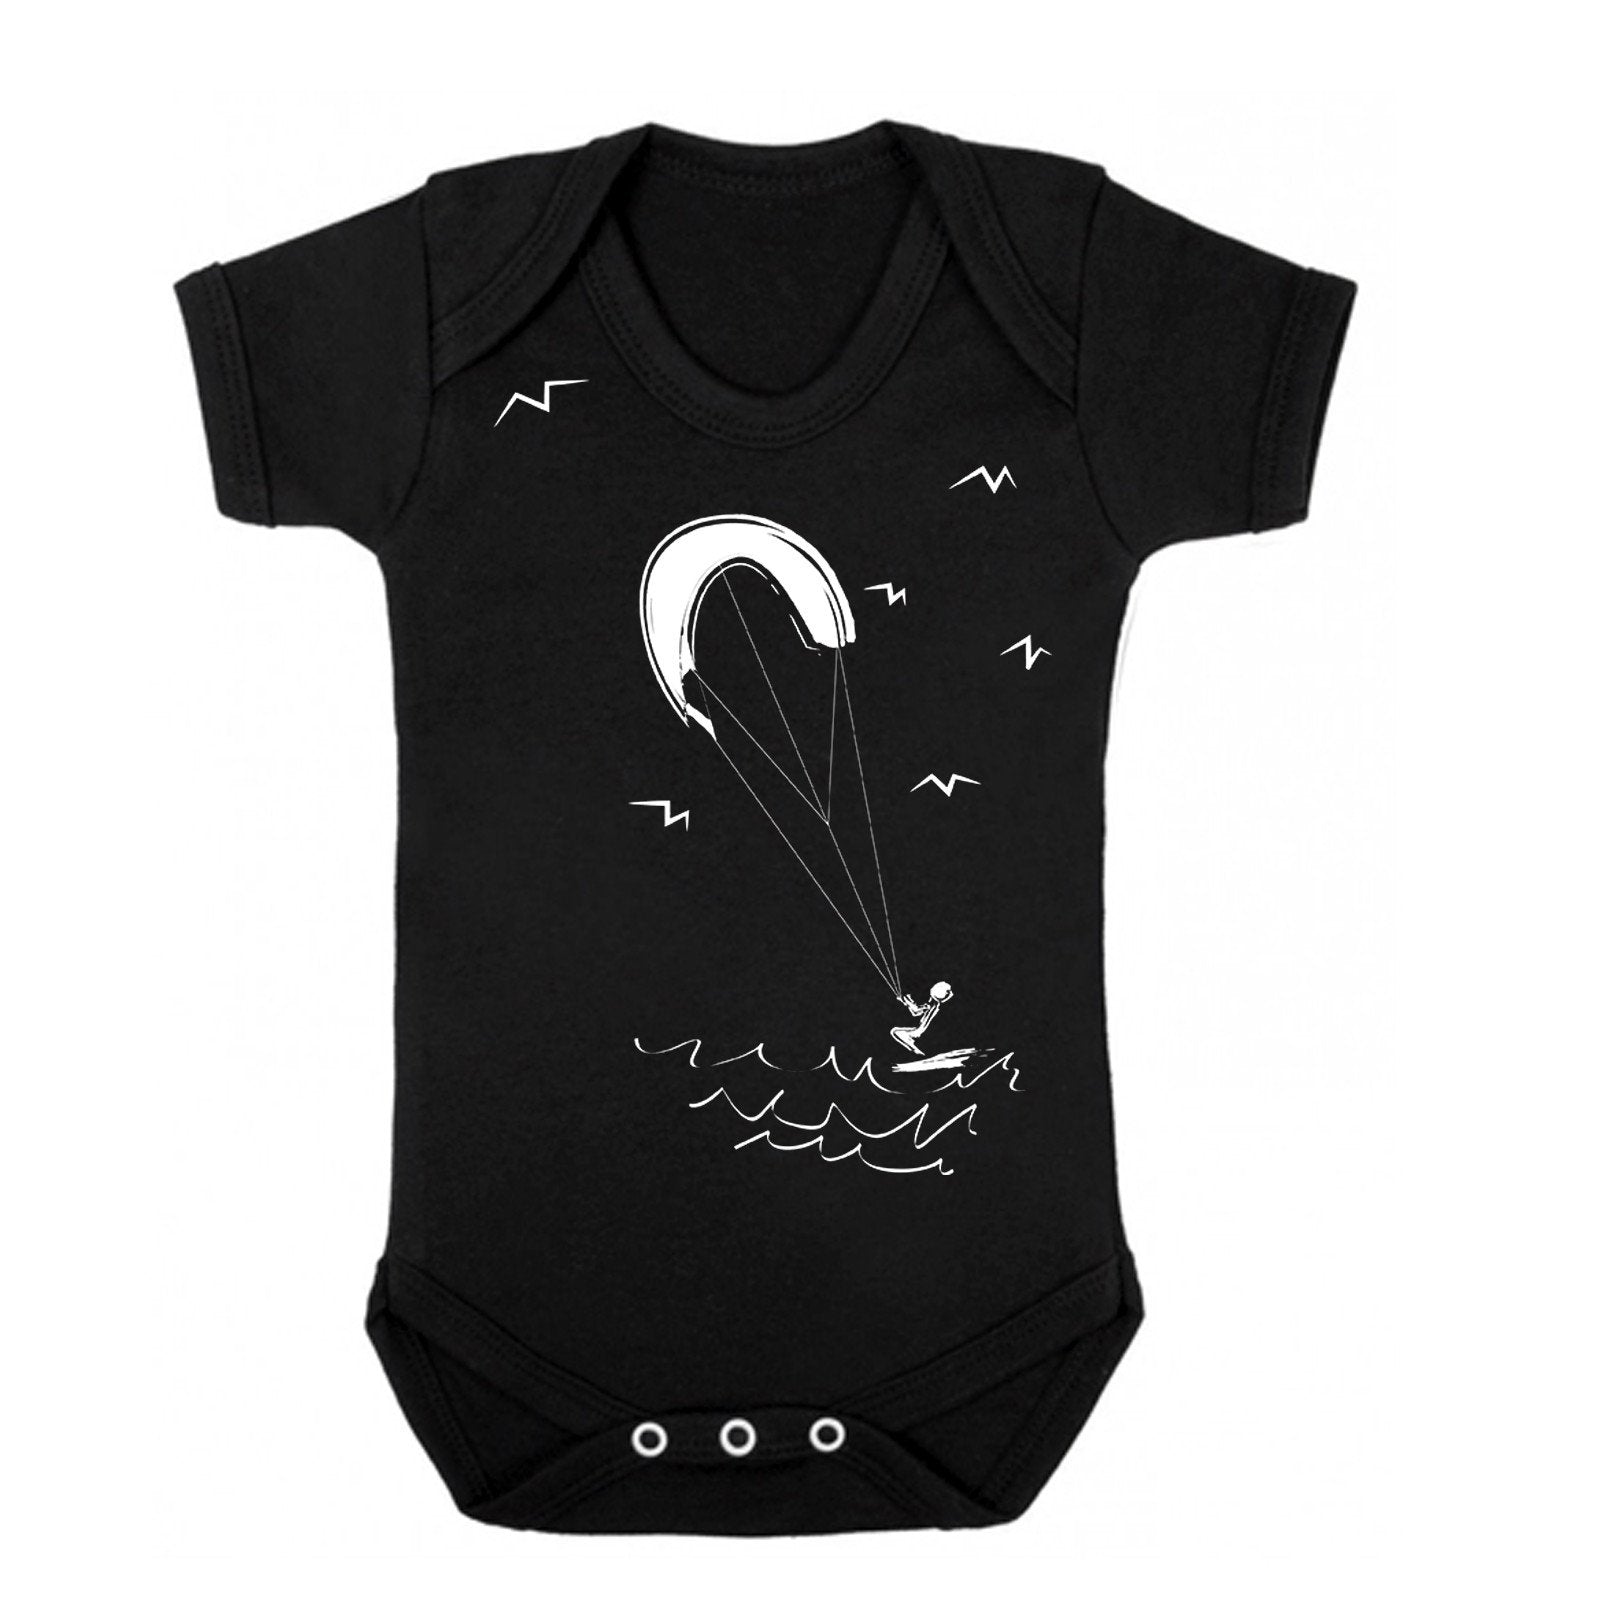 Babygrow - Kite Board Baby, Black